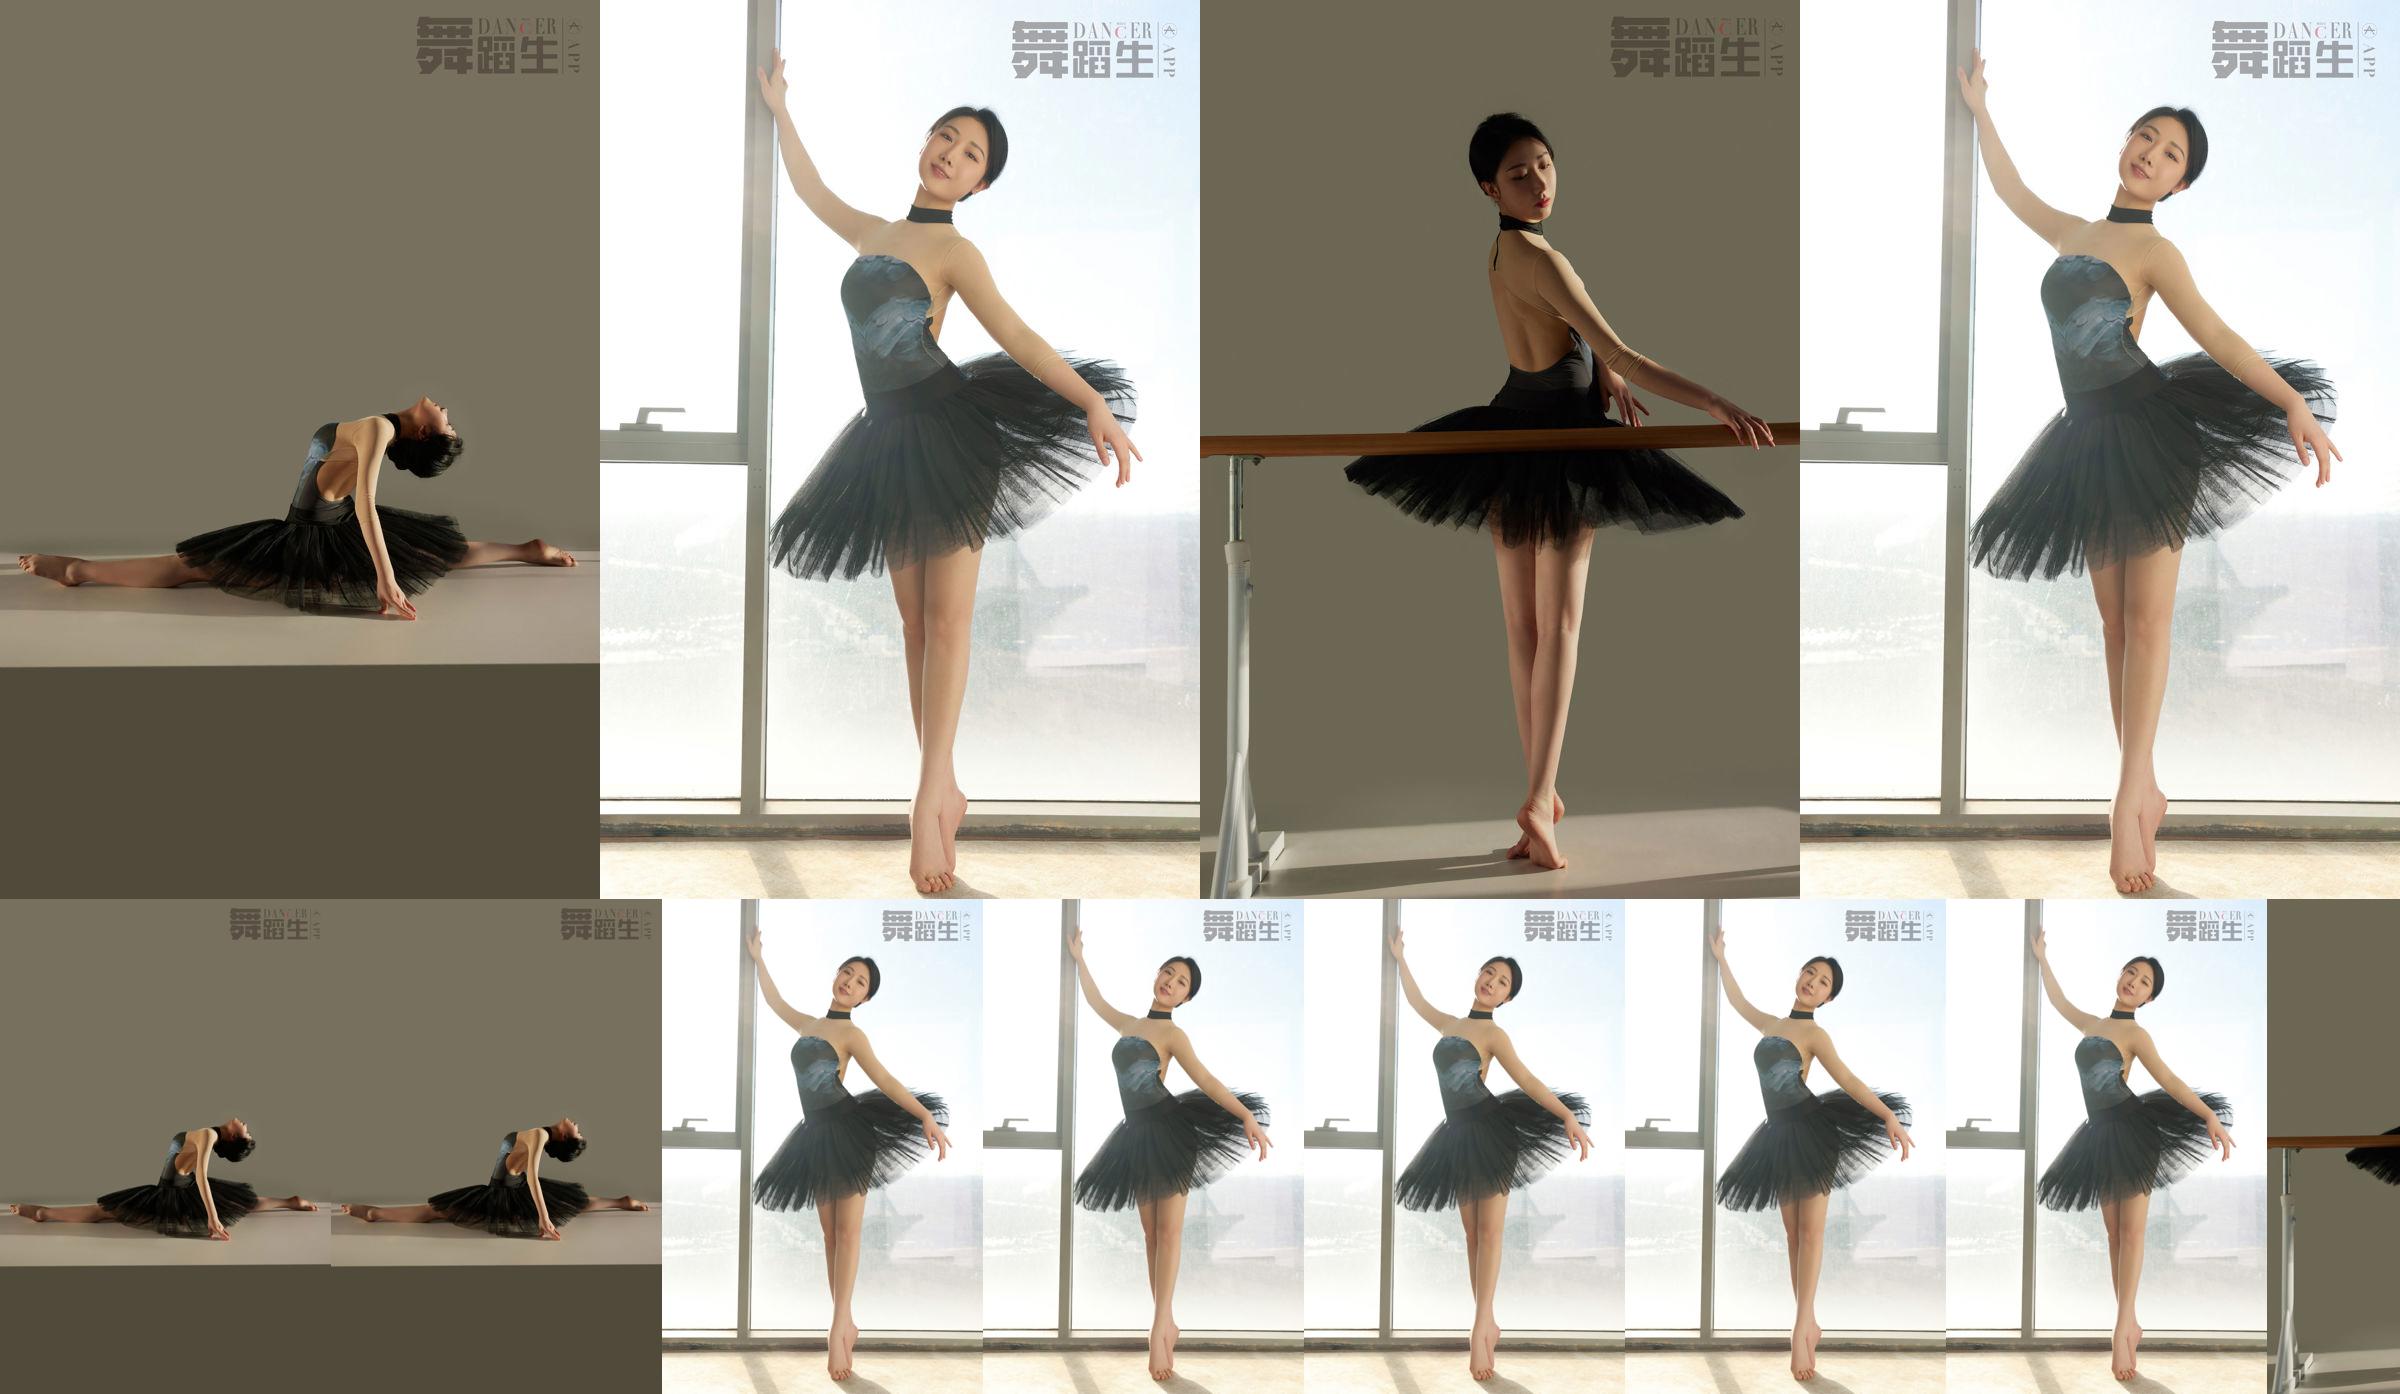 [Carrie Galli] Diario di una studentessa di danza 088 Xue Hui No.151098 Pagina 1